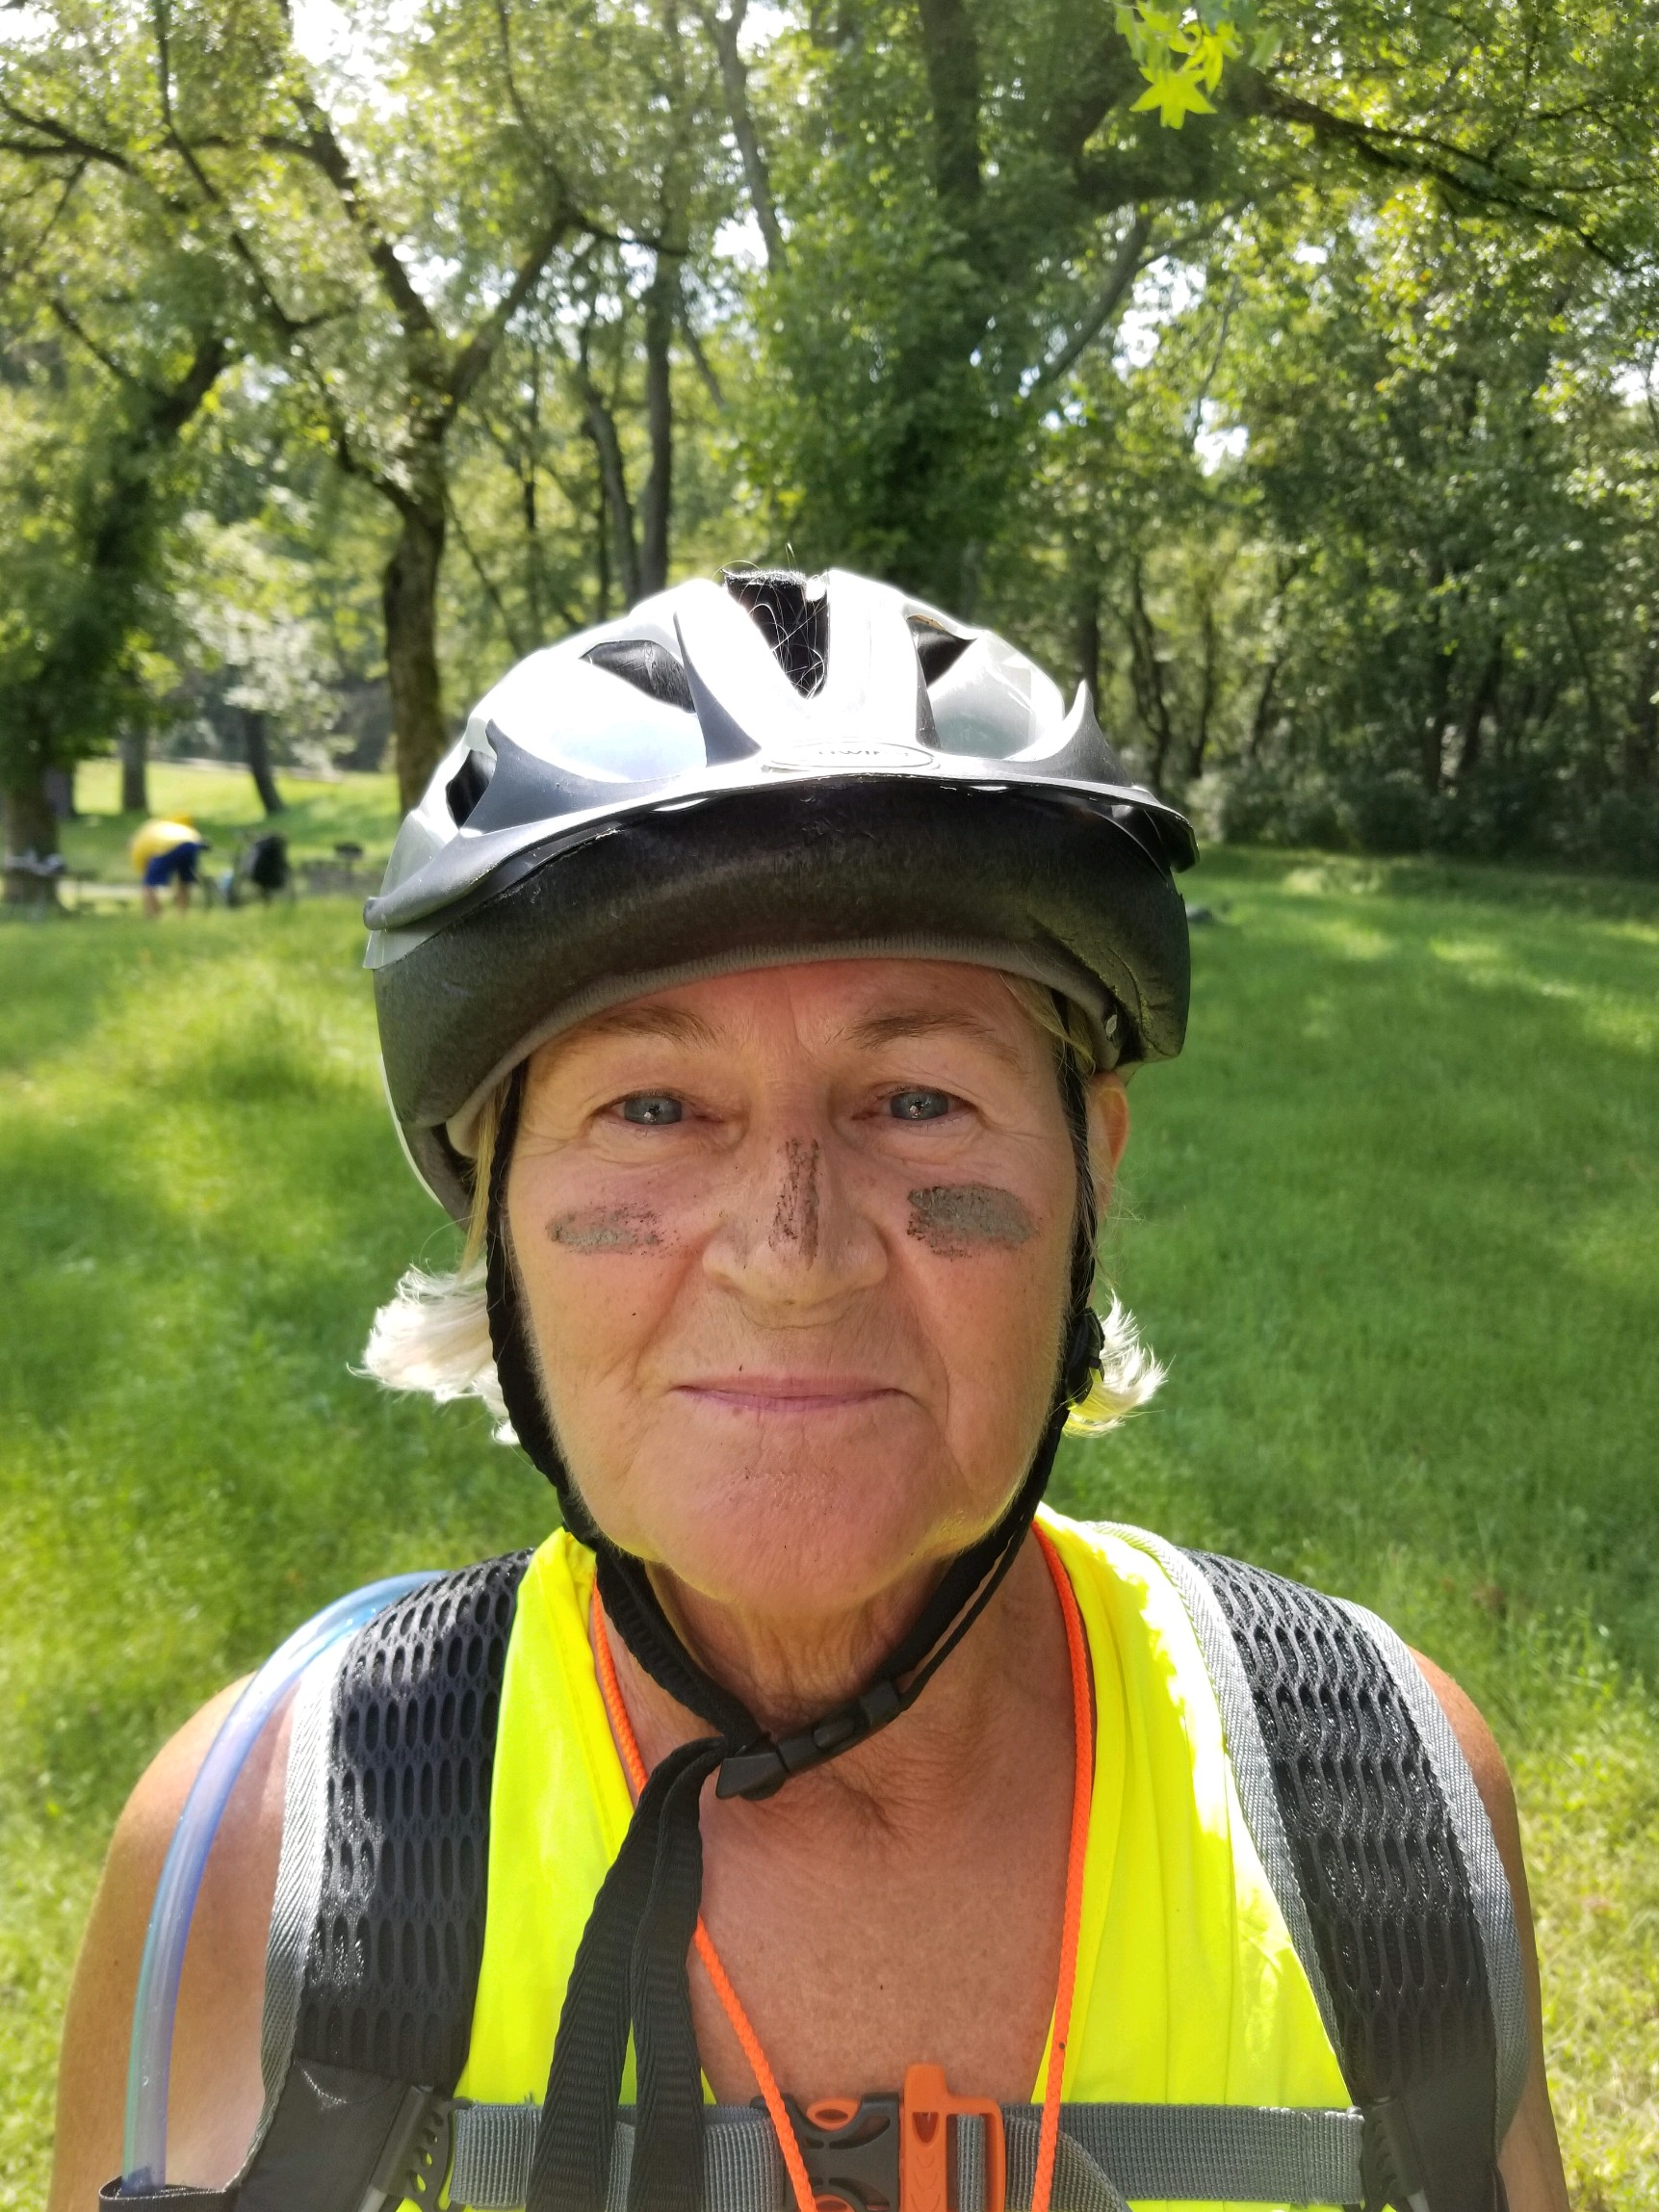 Lady with bike helmet on